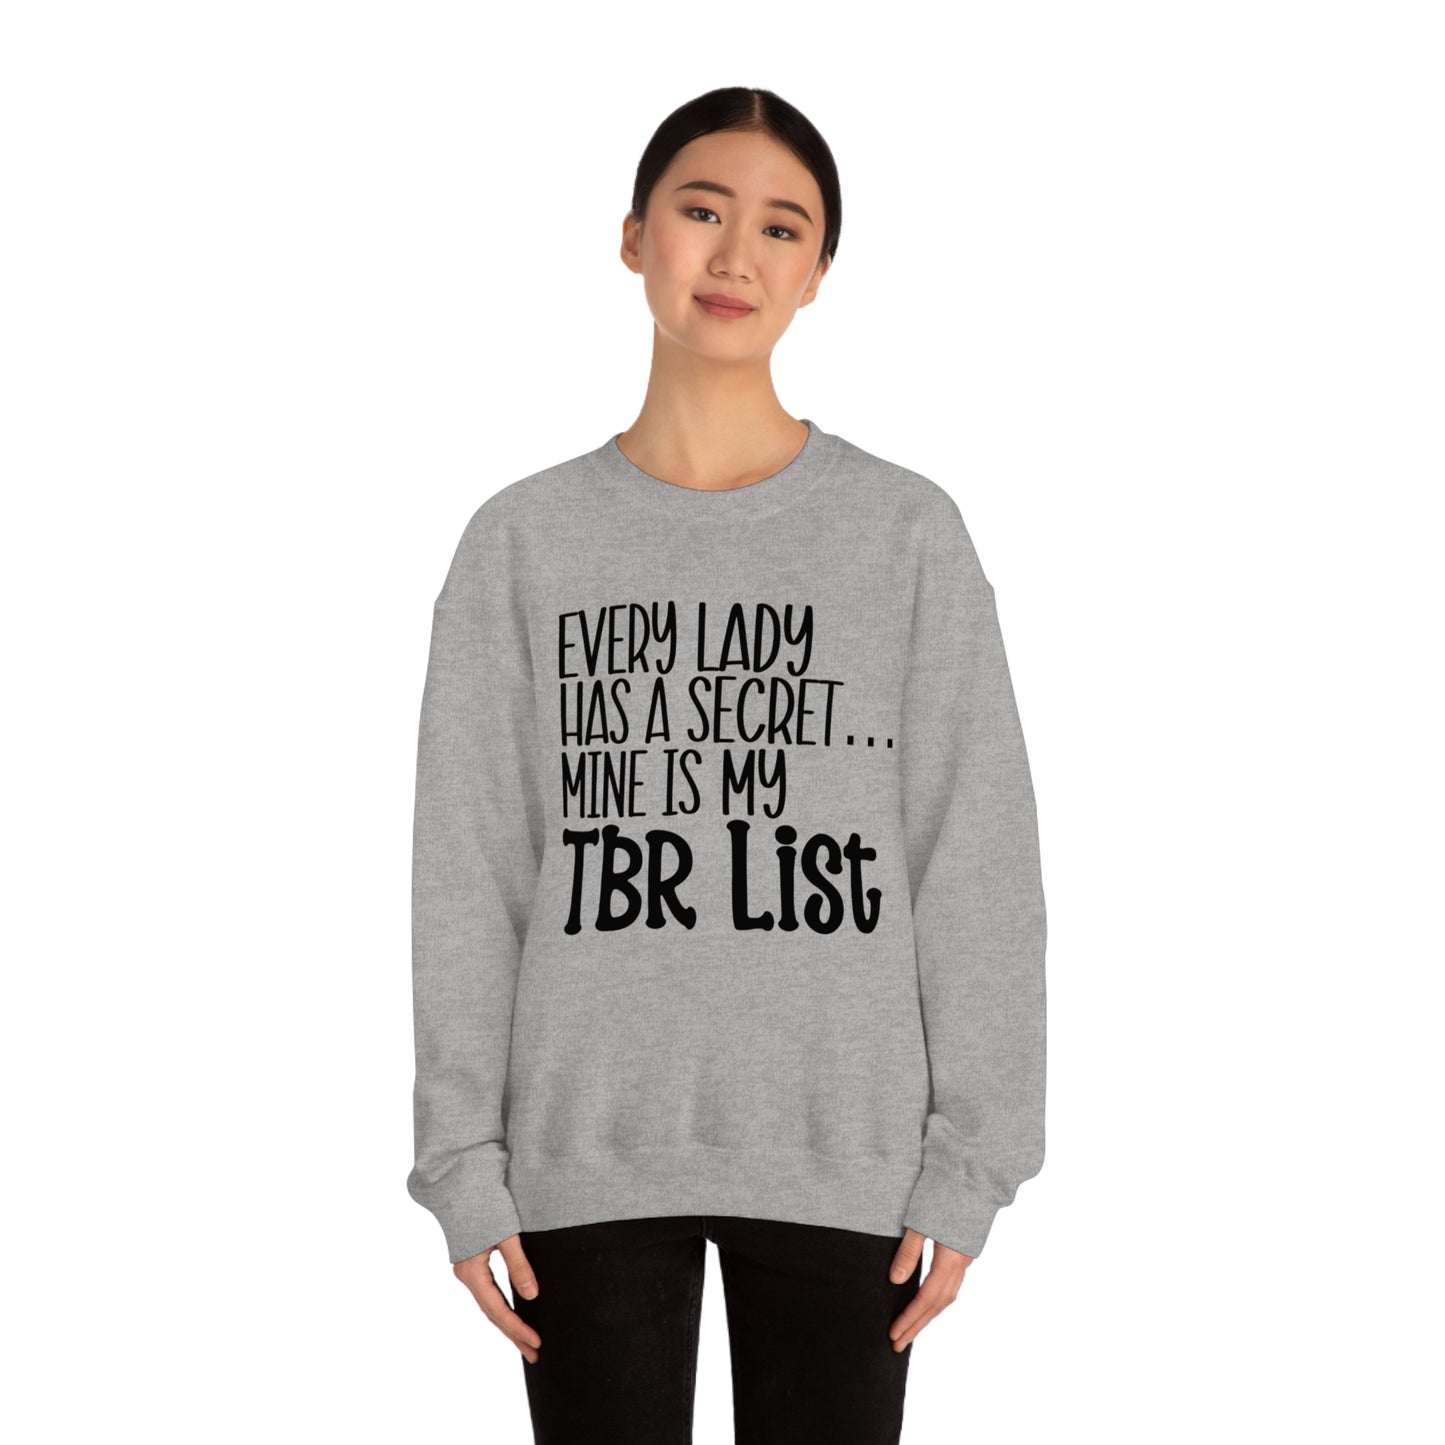 Every Lady Has a secret TBR list Crewneck Sweatshirt